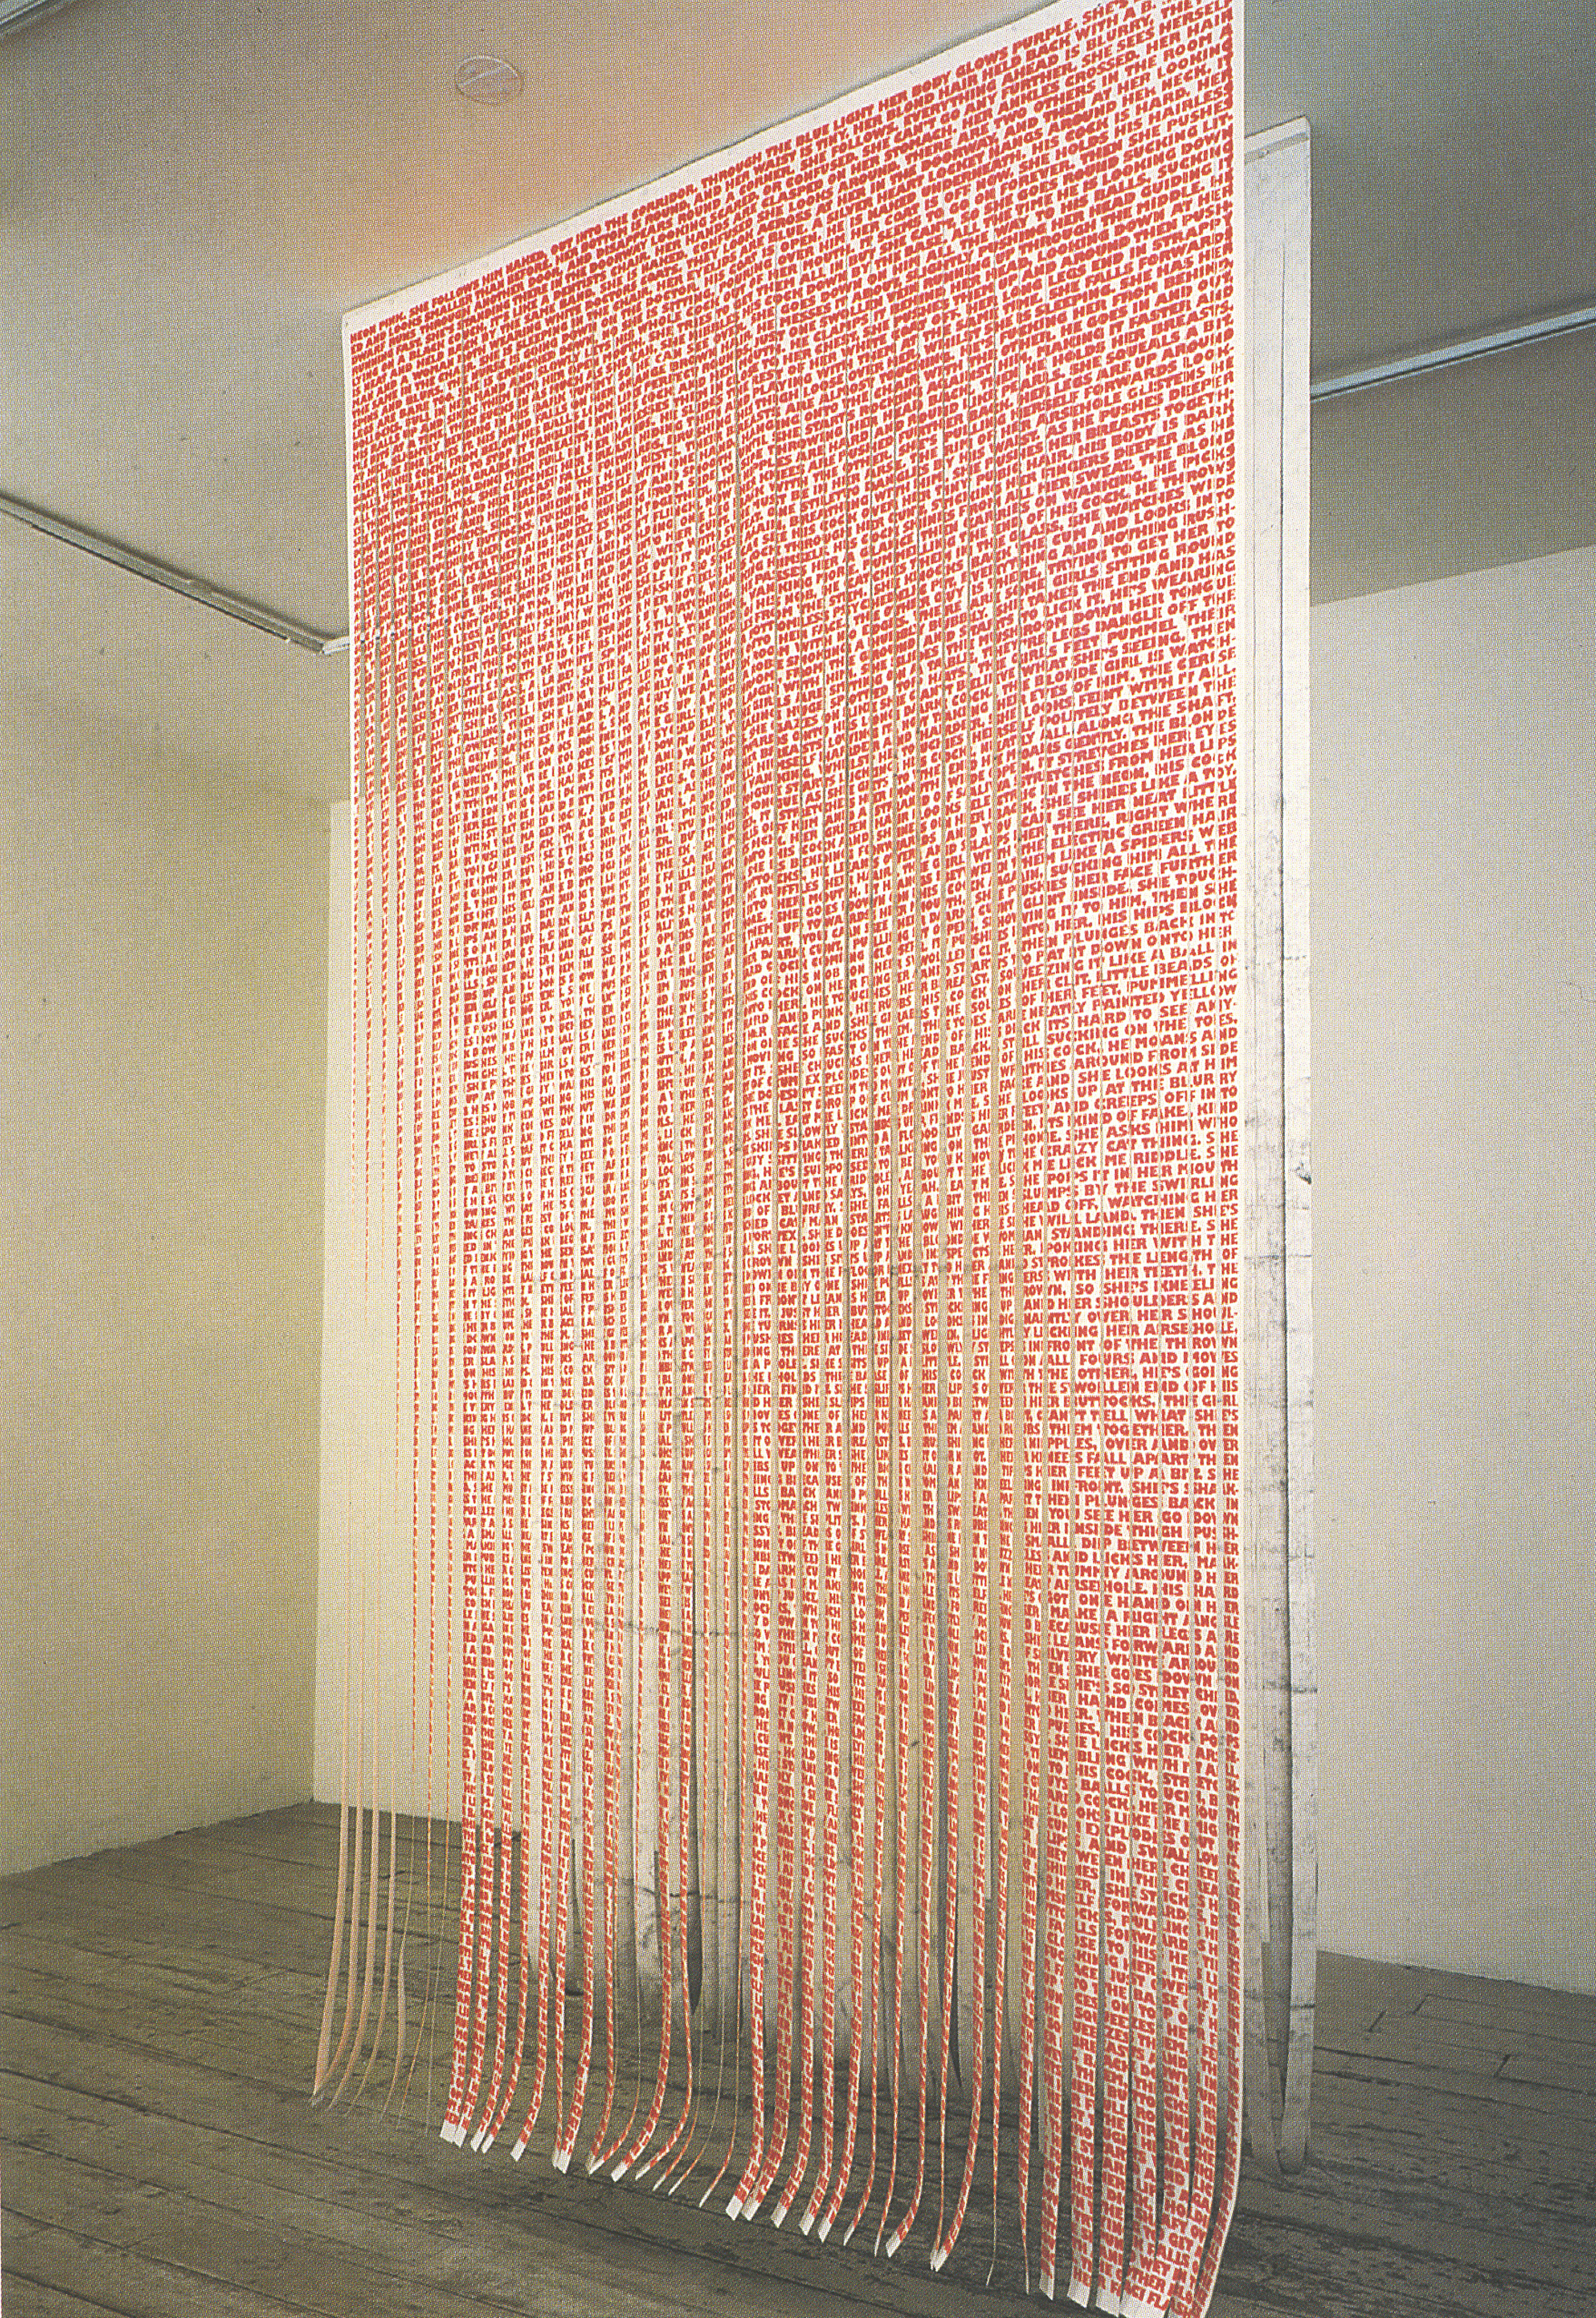 Galerie Barbara Thumm \ Fiona Banner aka The Vanity Press \ Colour Blind (Arsewoman) (2001)